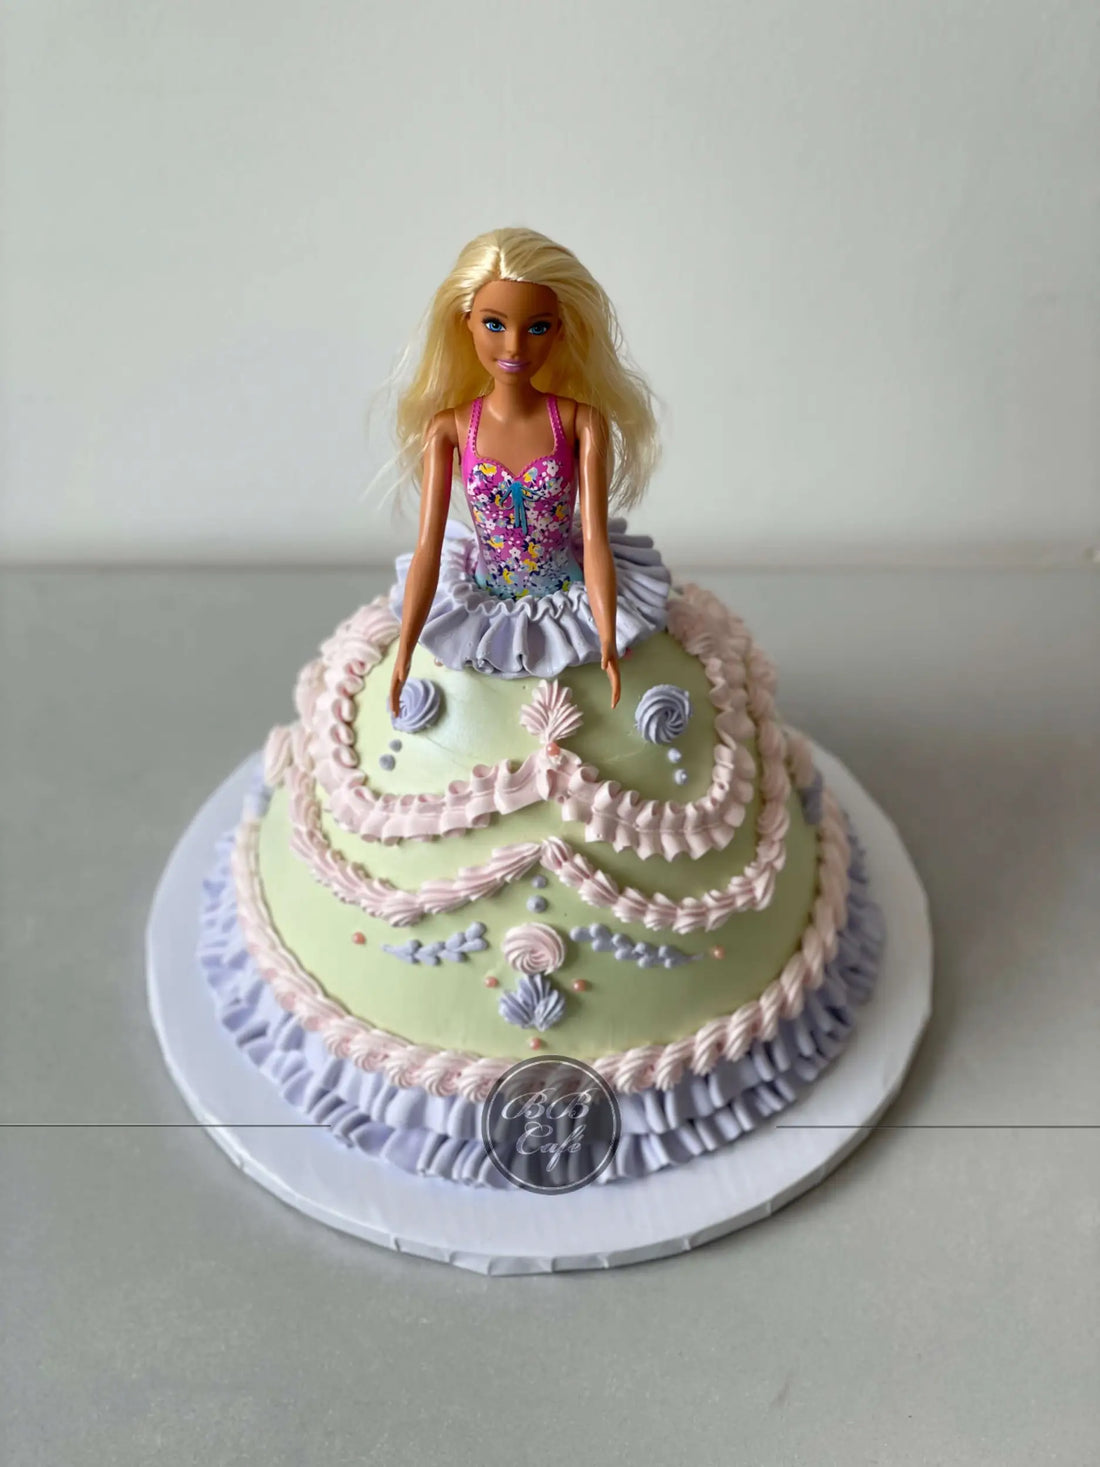 Barbie doll lambeth dress in whipped cream - custom cake